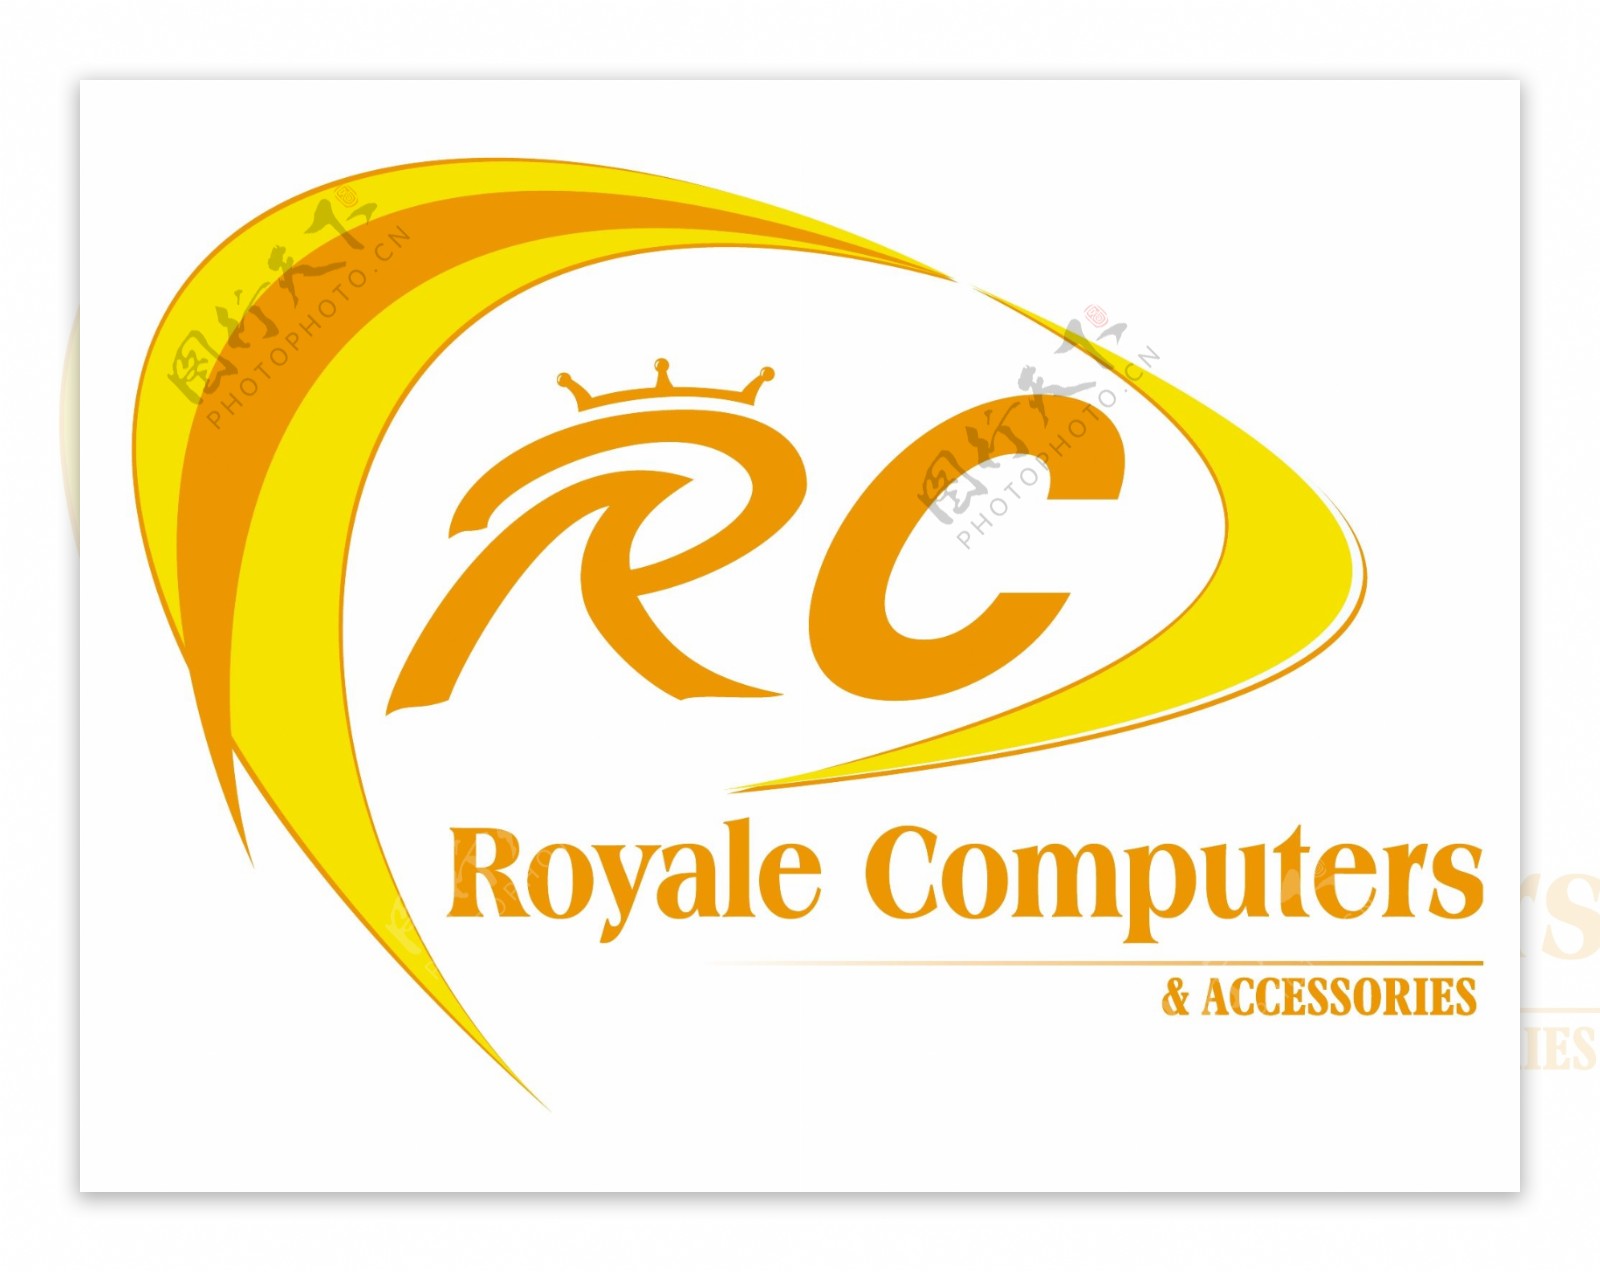 RoayleComputersandAccessorieslogo设计欣赏RoayleComputersandAccessories网络公司标志下载标志设计欣赏